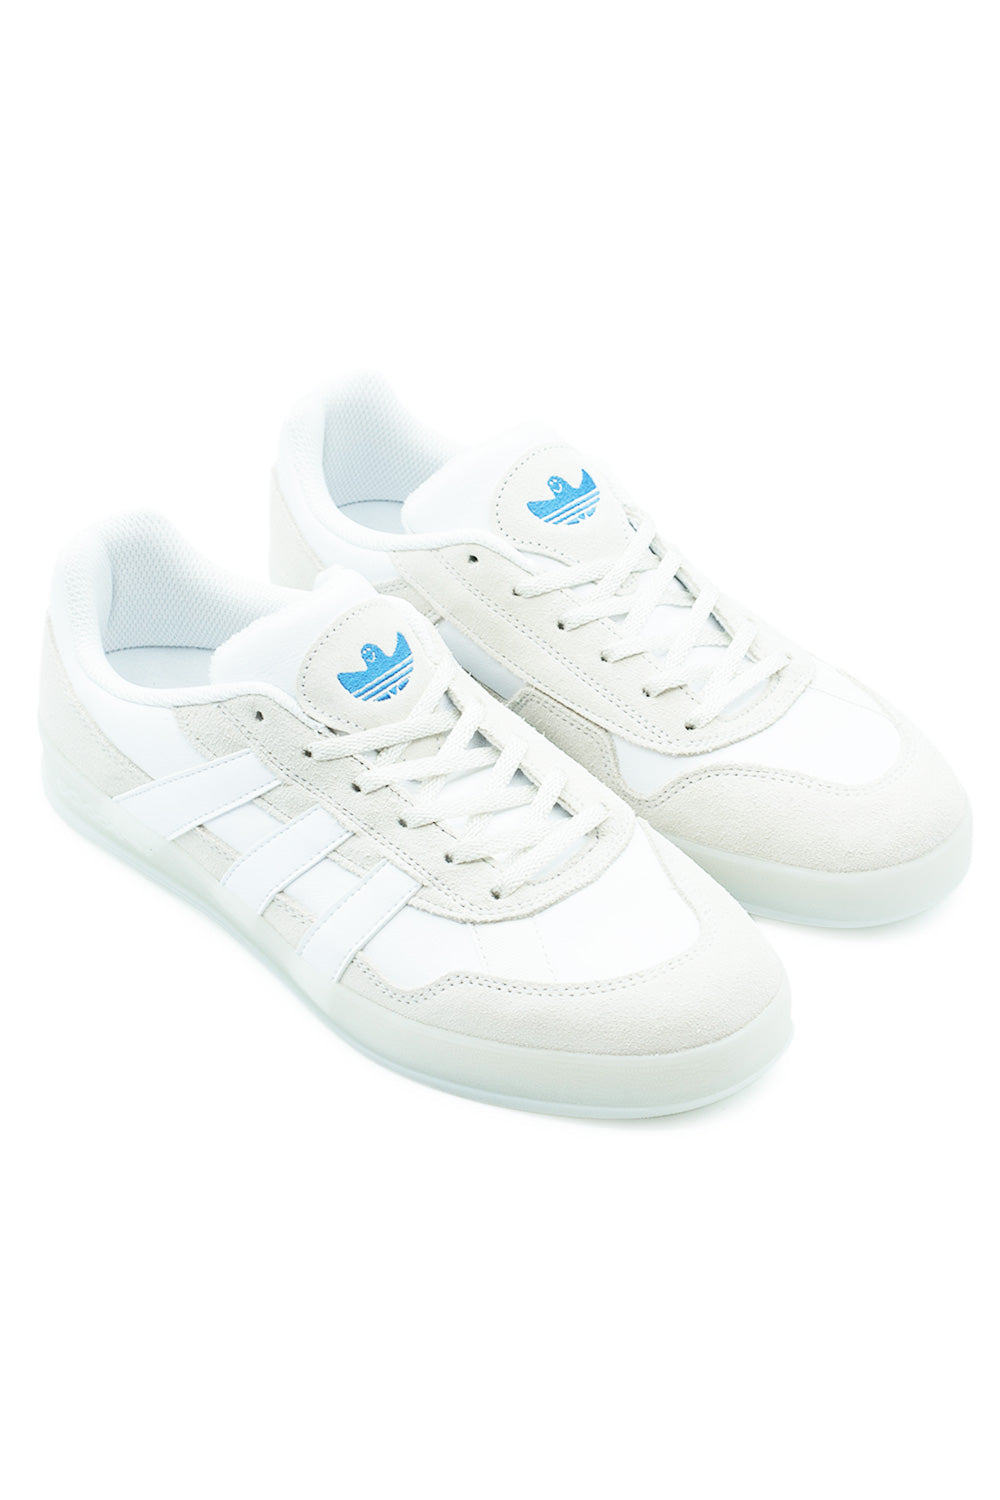 Adidas Aloha Super Shoe Chalk White / Cloud White / Blue Bird - BONKERS